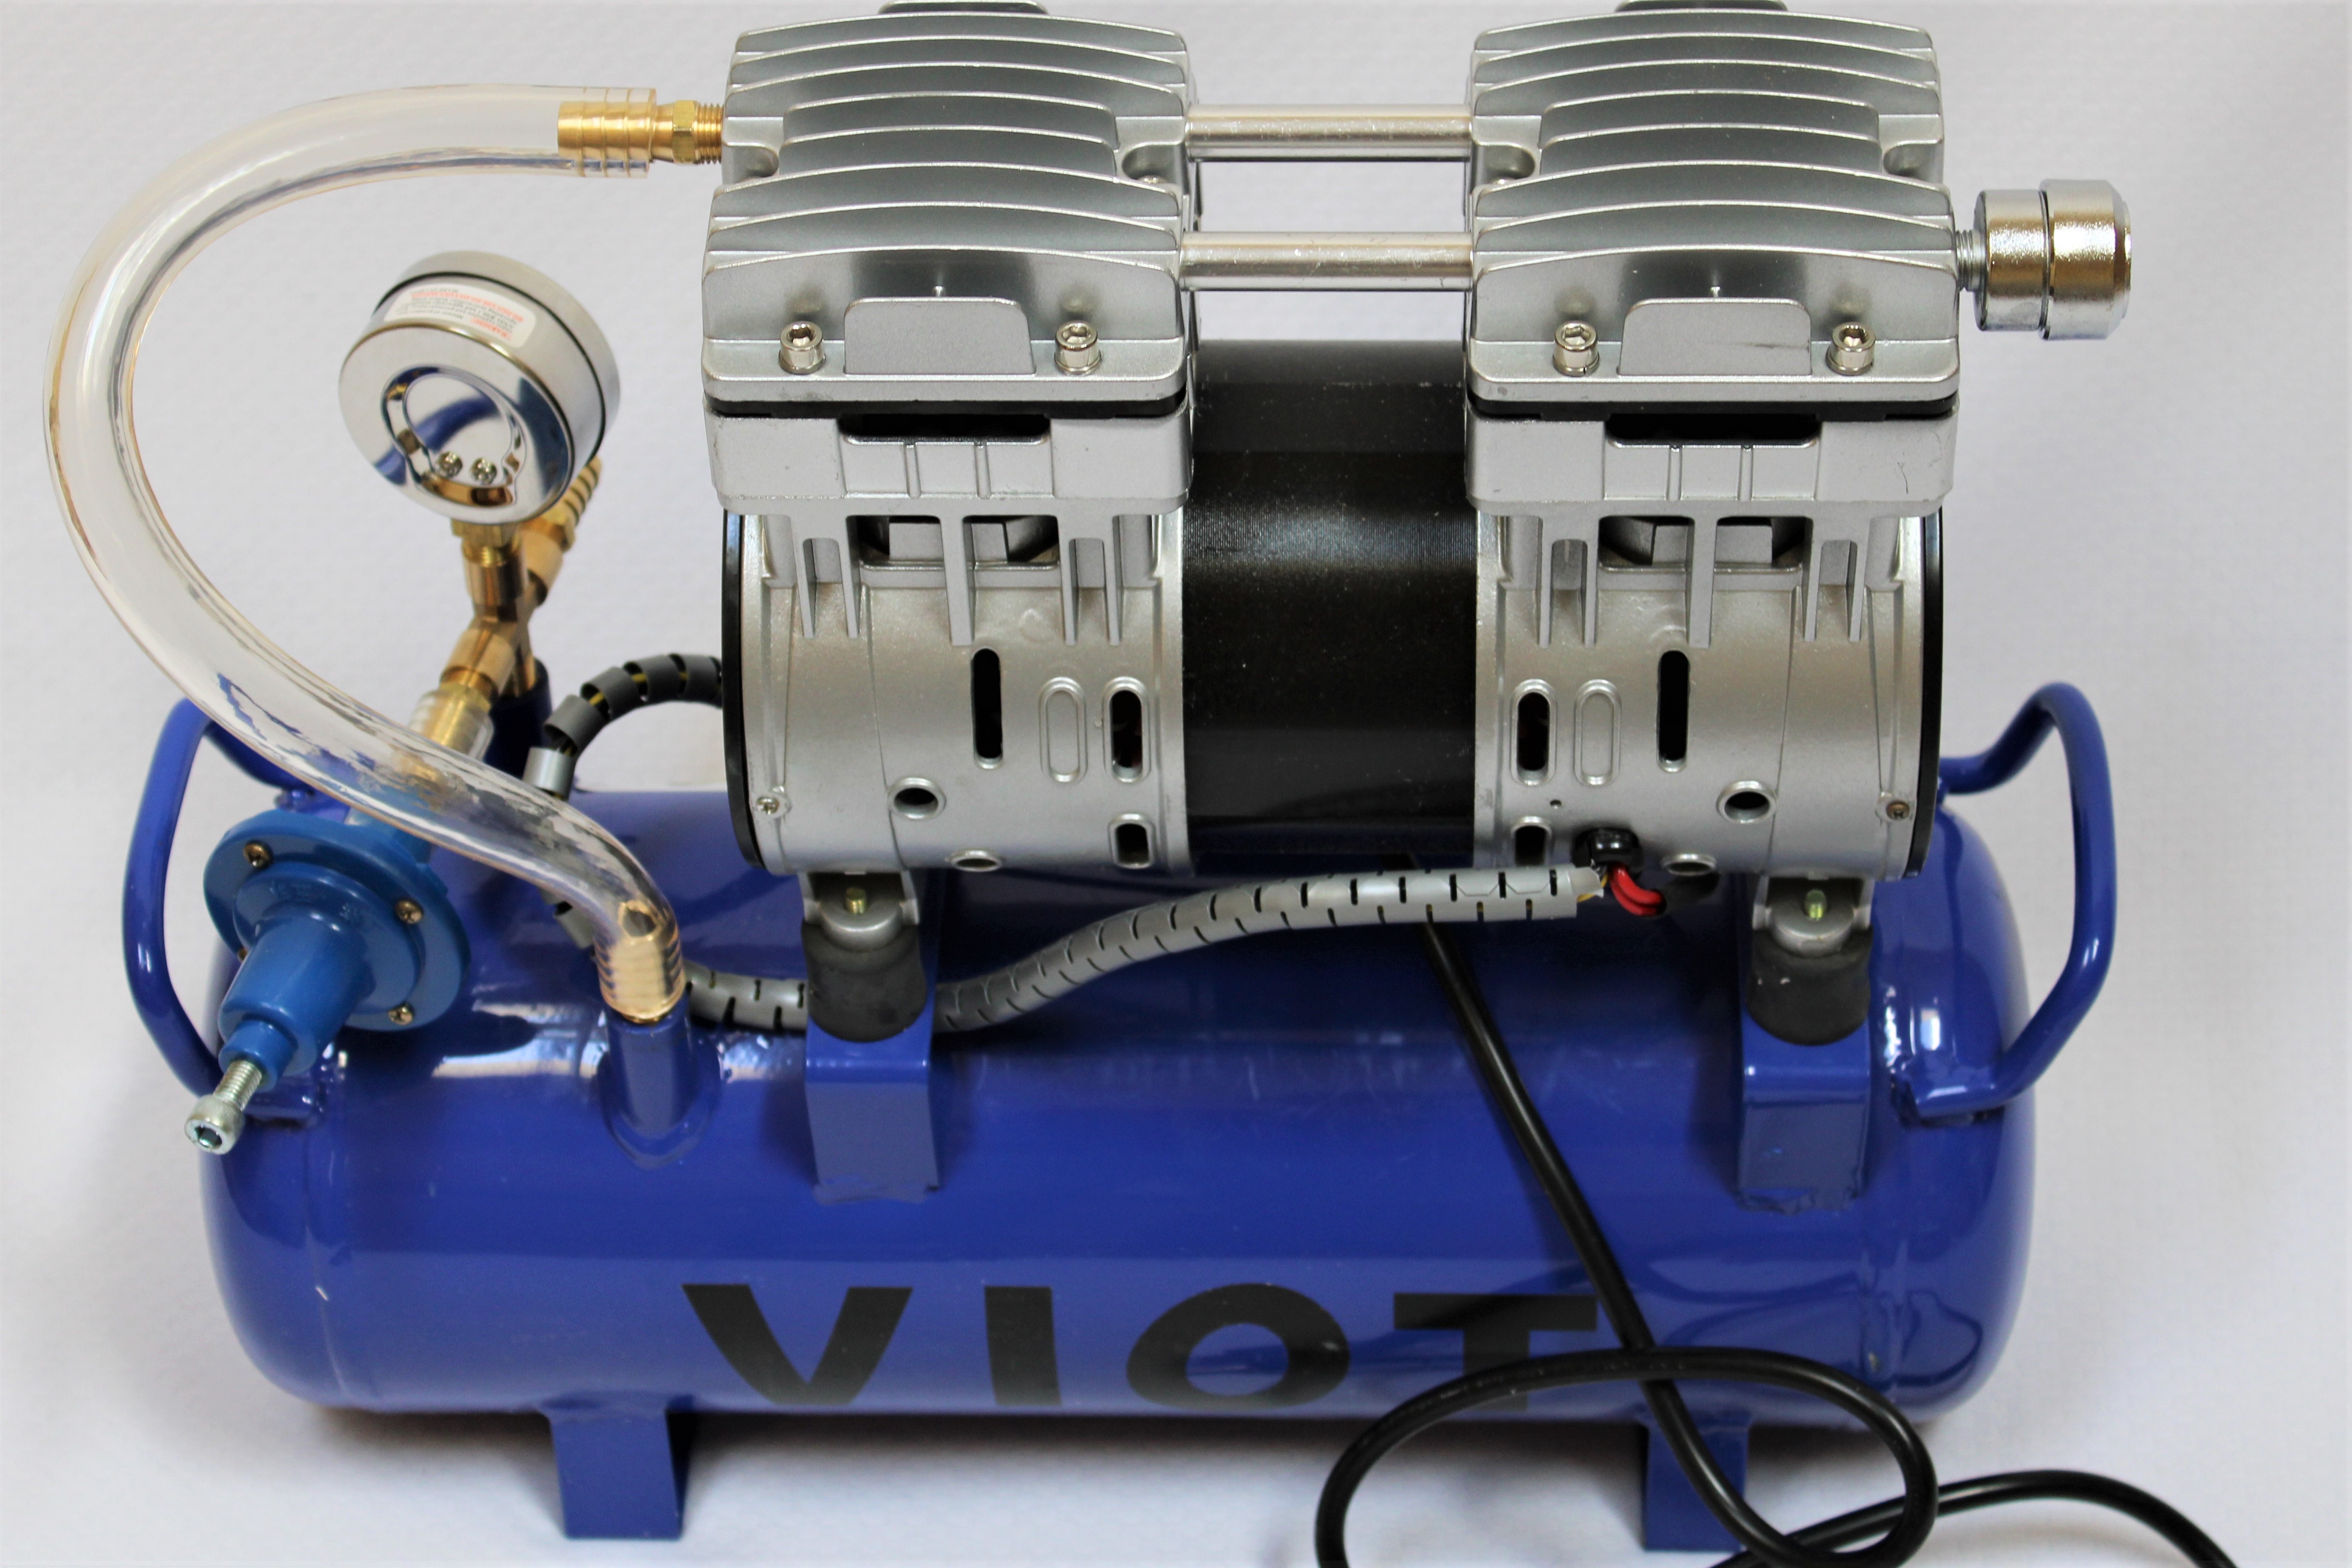 OIL-LESS VACUUM Pump System: automatic max vacuum pressure control, tank Regulator Gauge